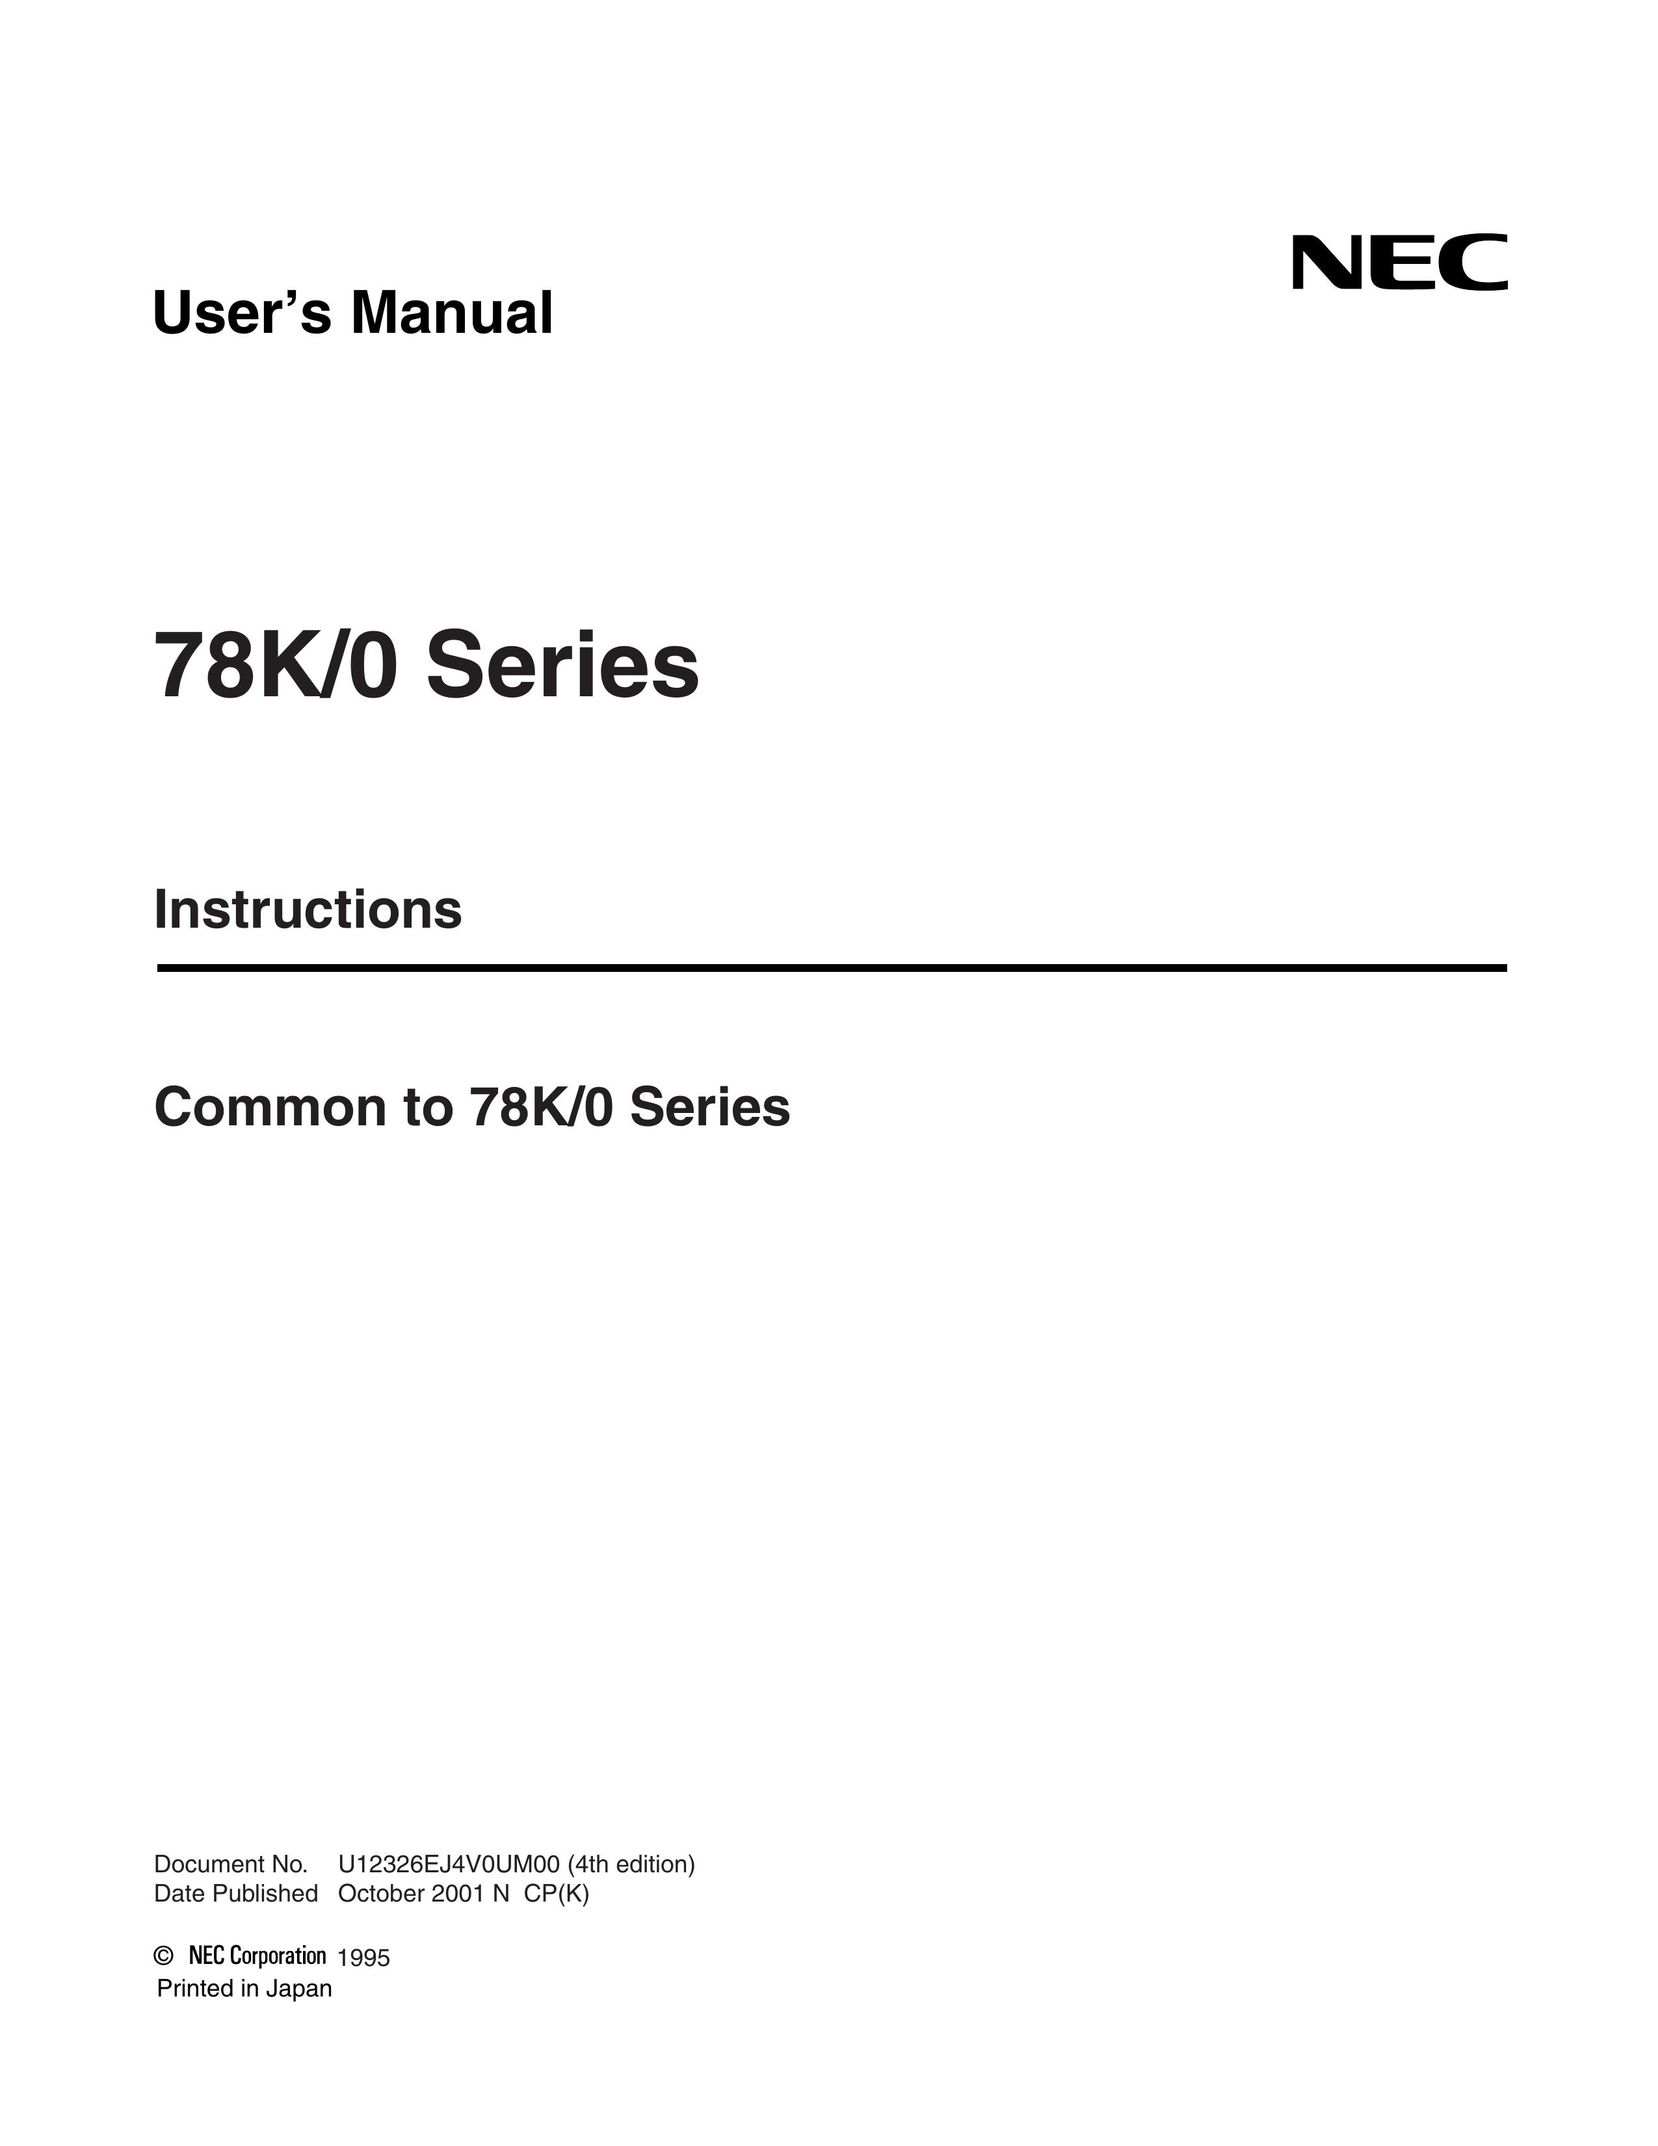 NEC 78K/0 Series Computer Hardware User Manual